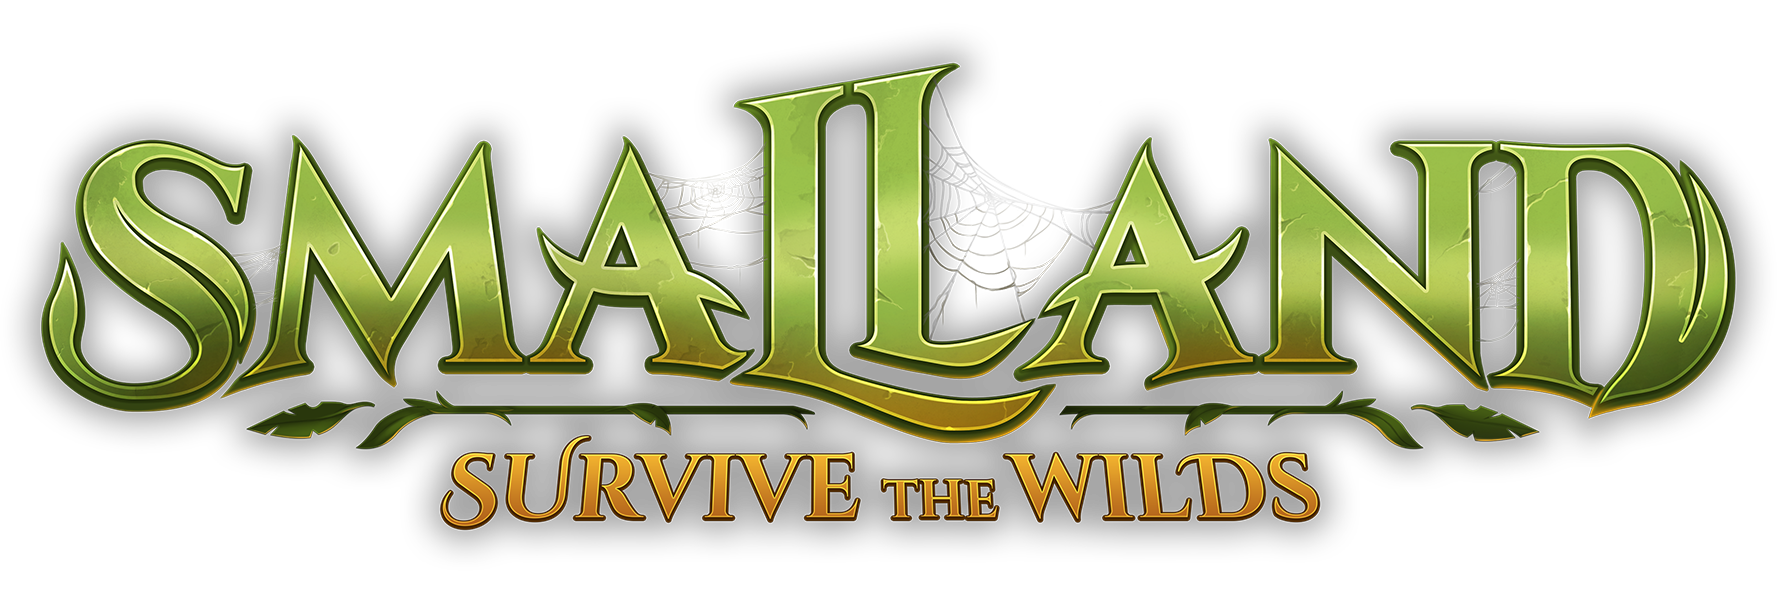 Smalland: Survive the Wilds - Standard Edition (PS5) – Signature